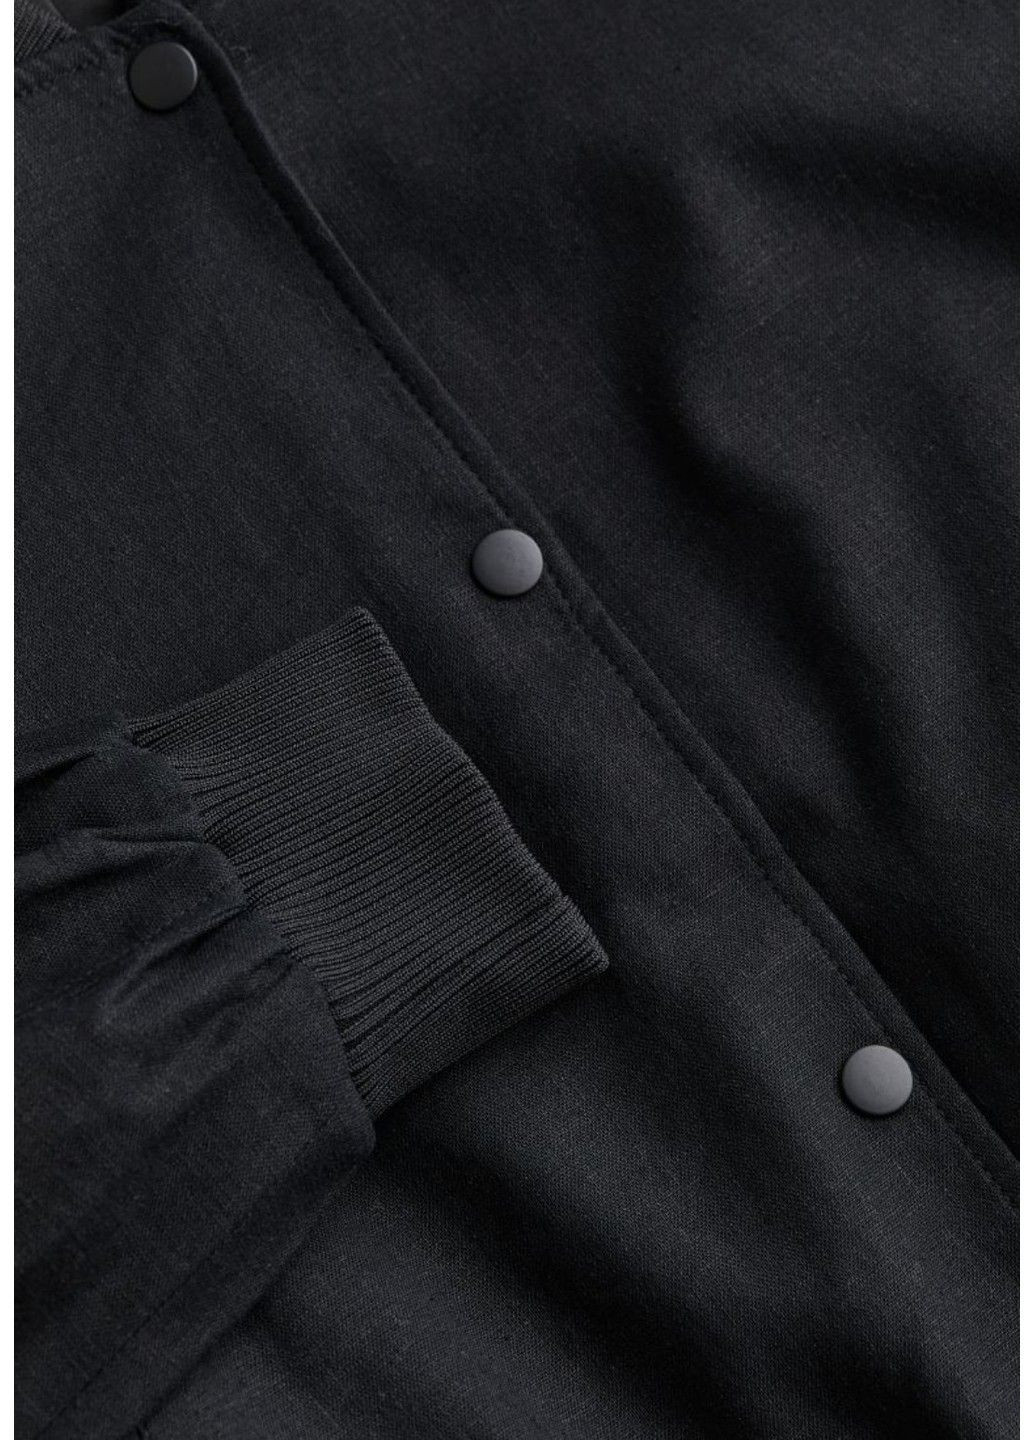 Черная летняя женская льняная куртка бомбер н&м (56836) xs черная H&M